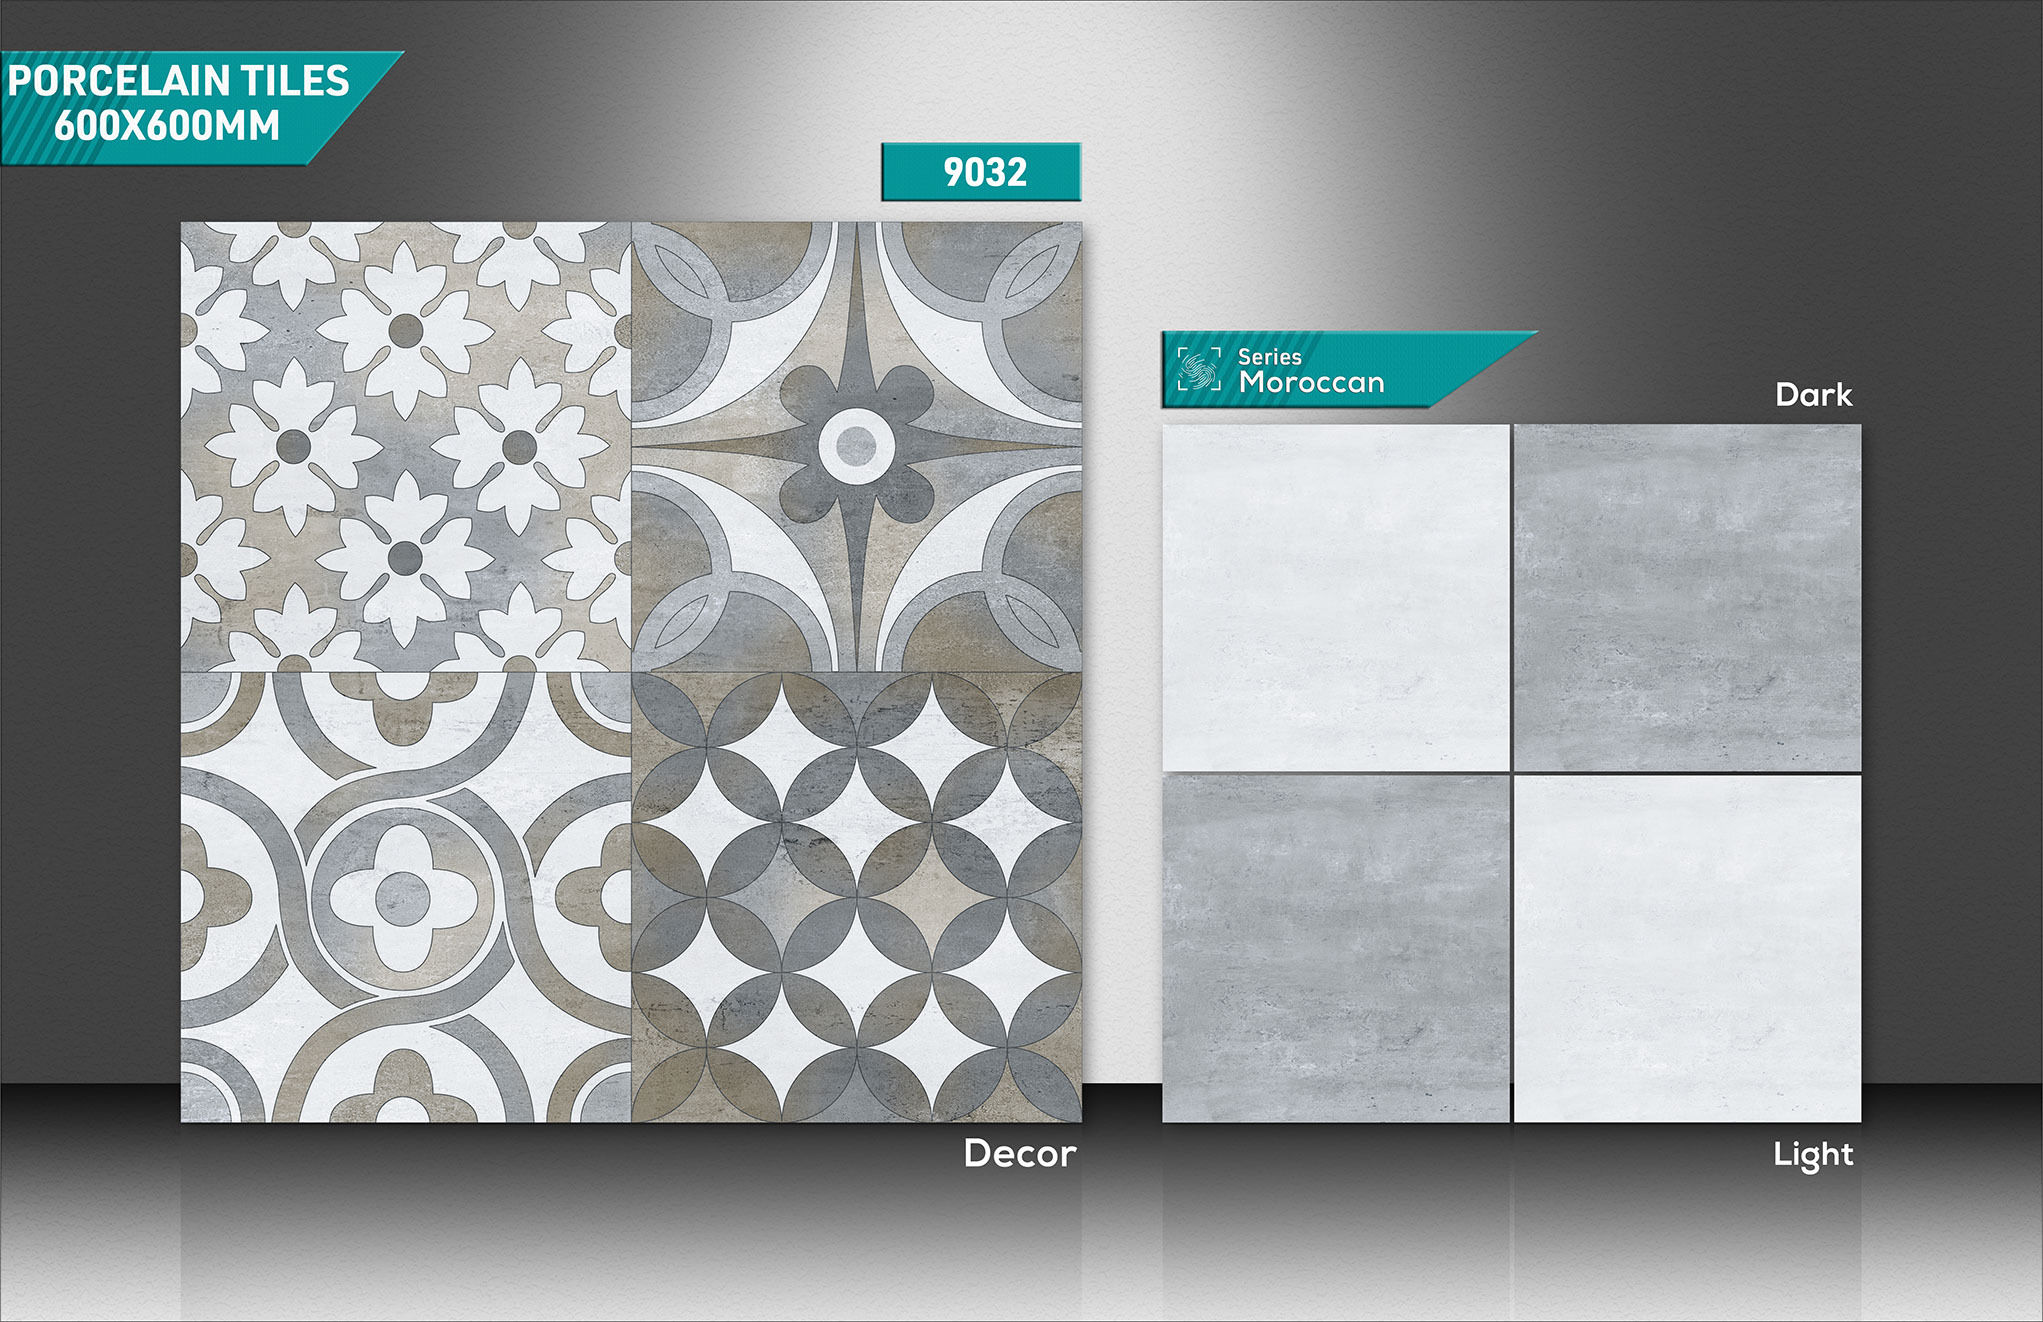 600x600mm Moroccan Series Porcelain tiles